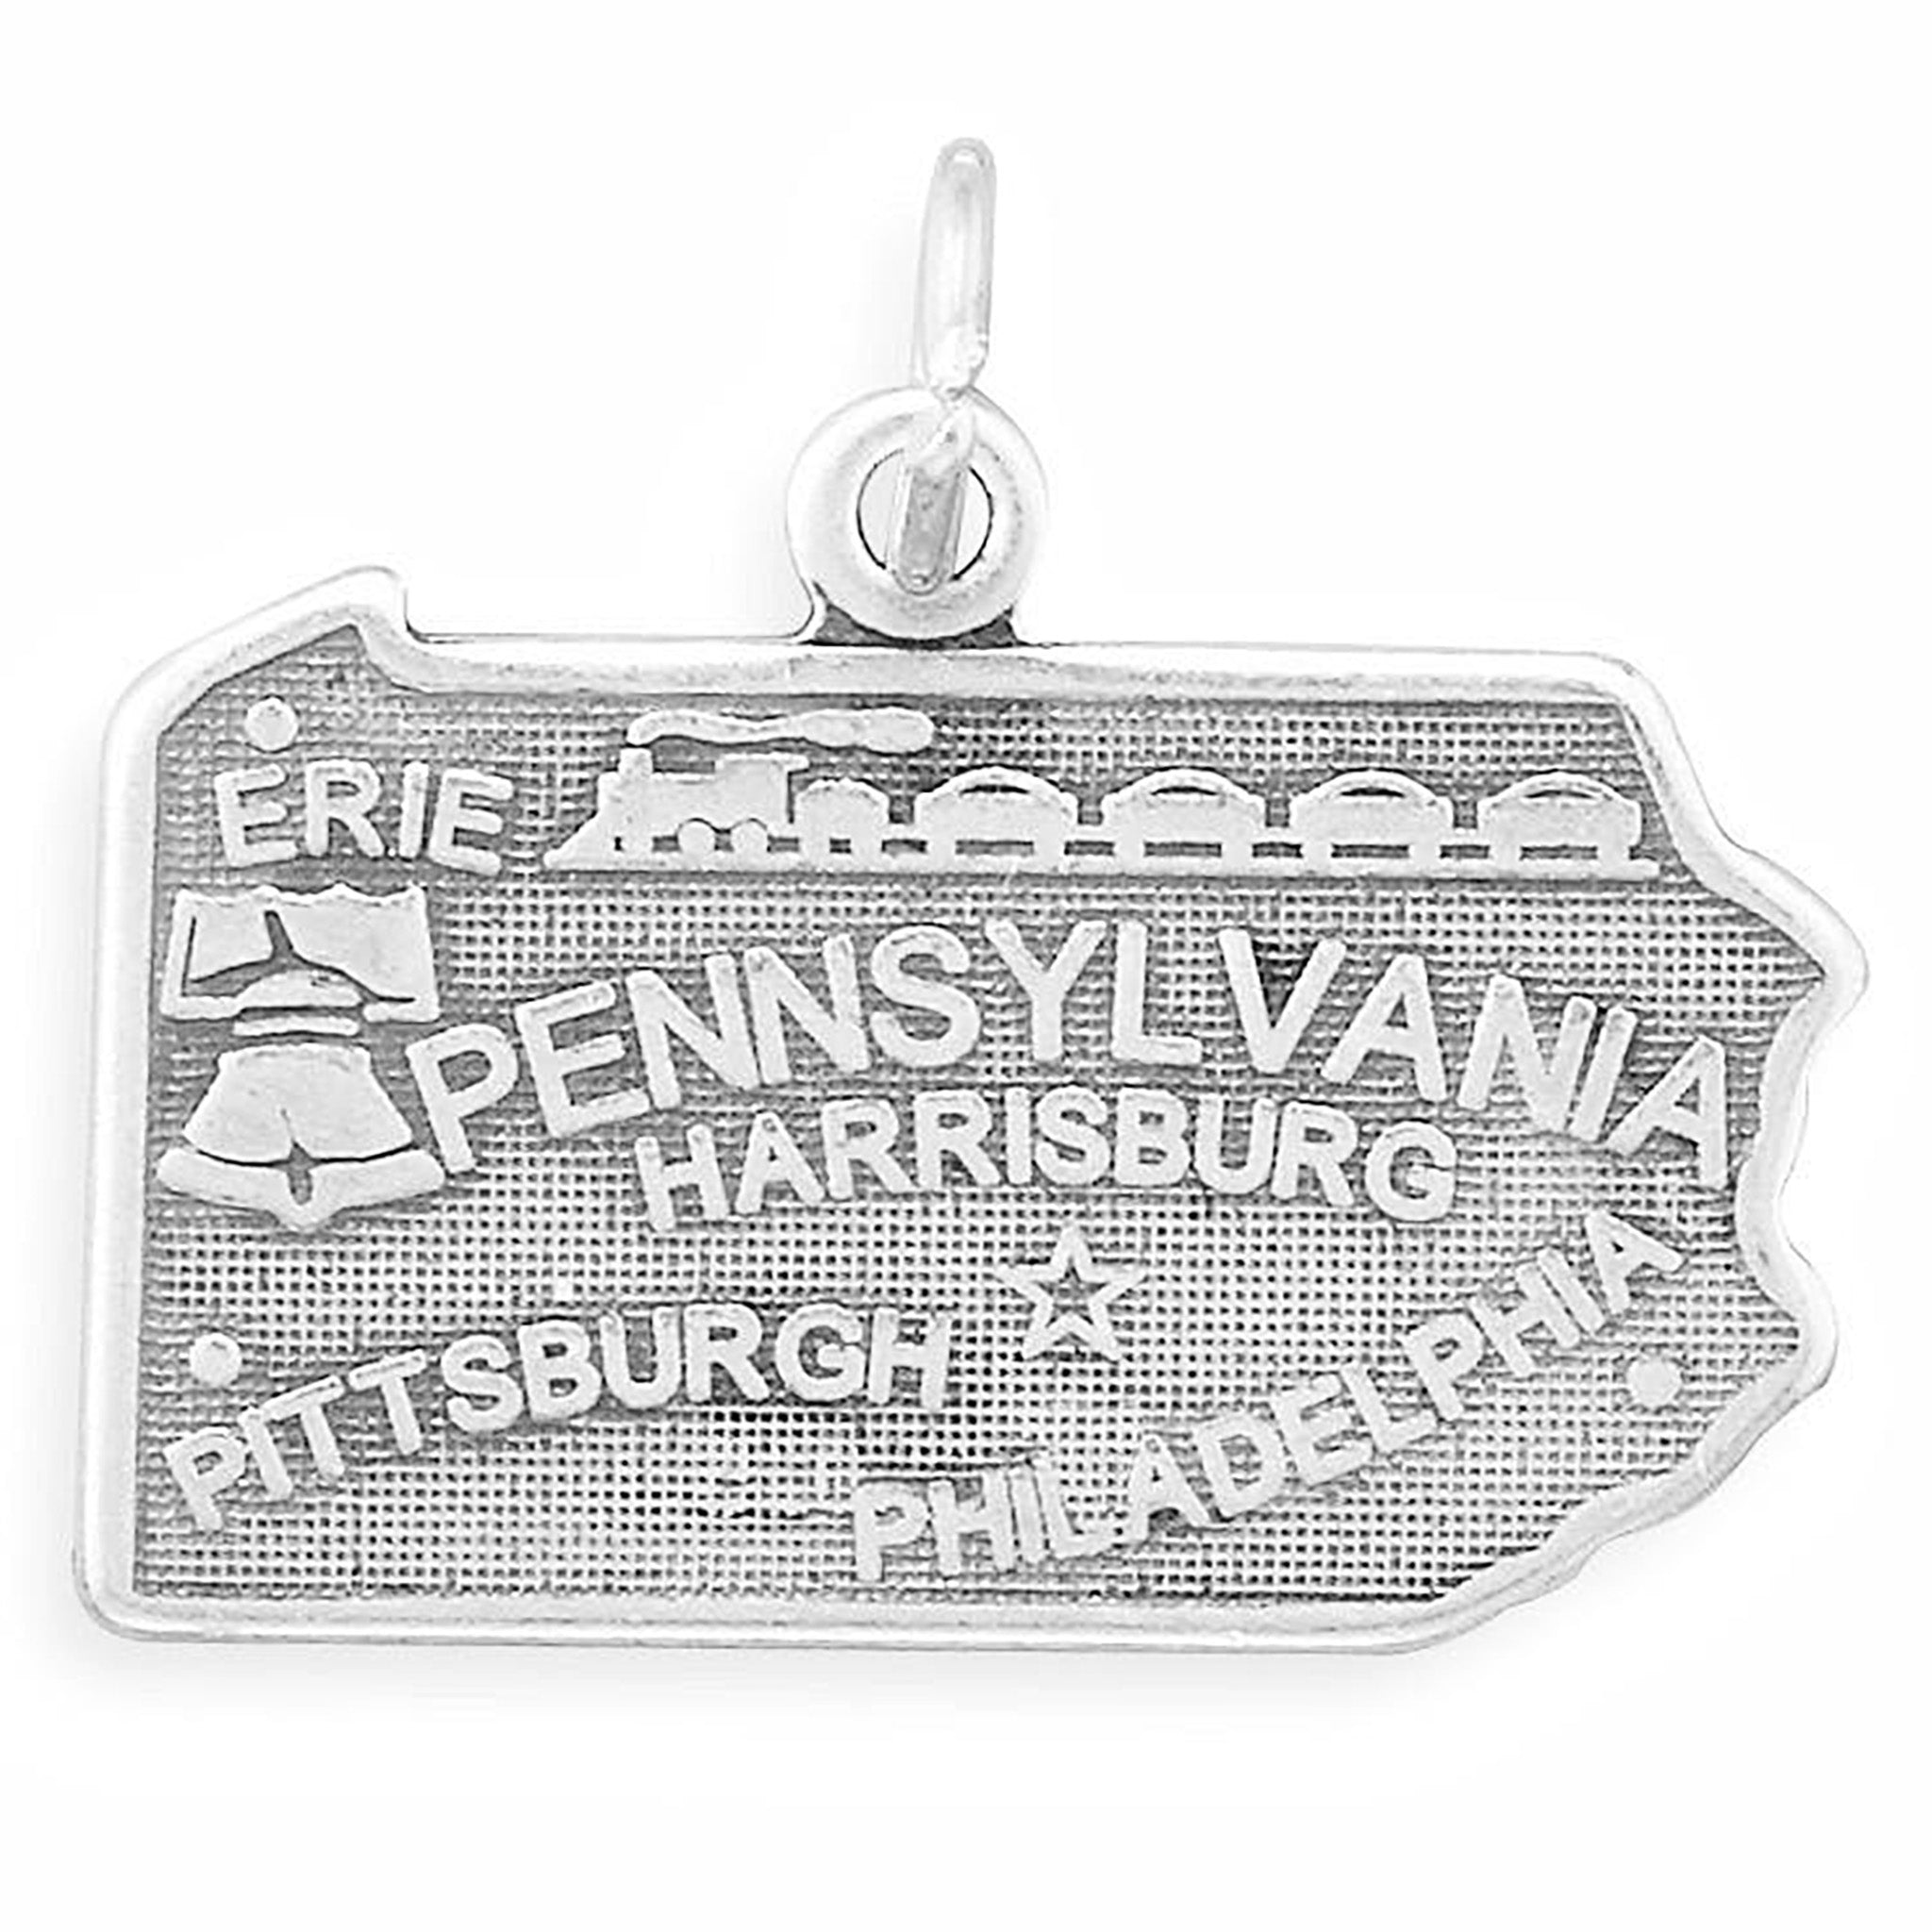 Pennsylvania State Charm